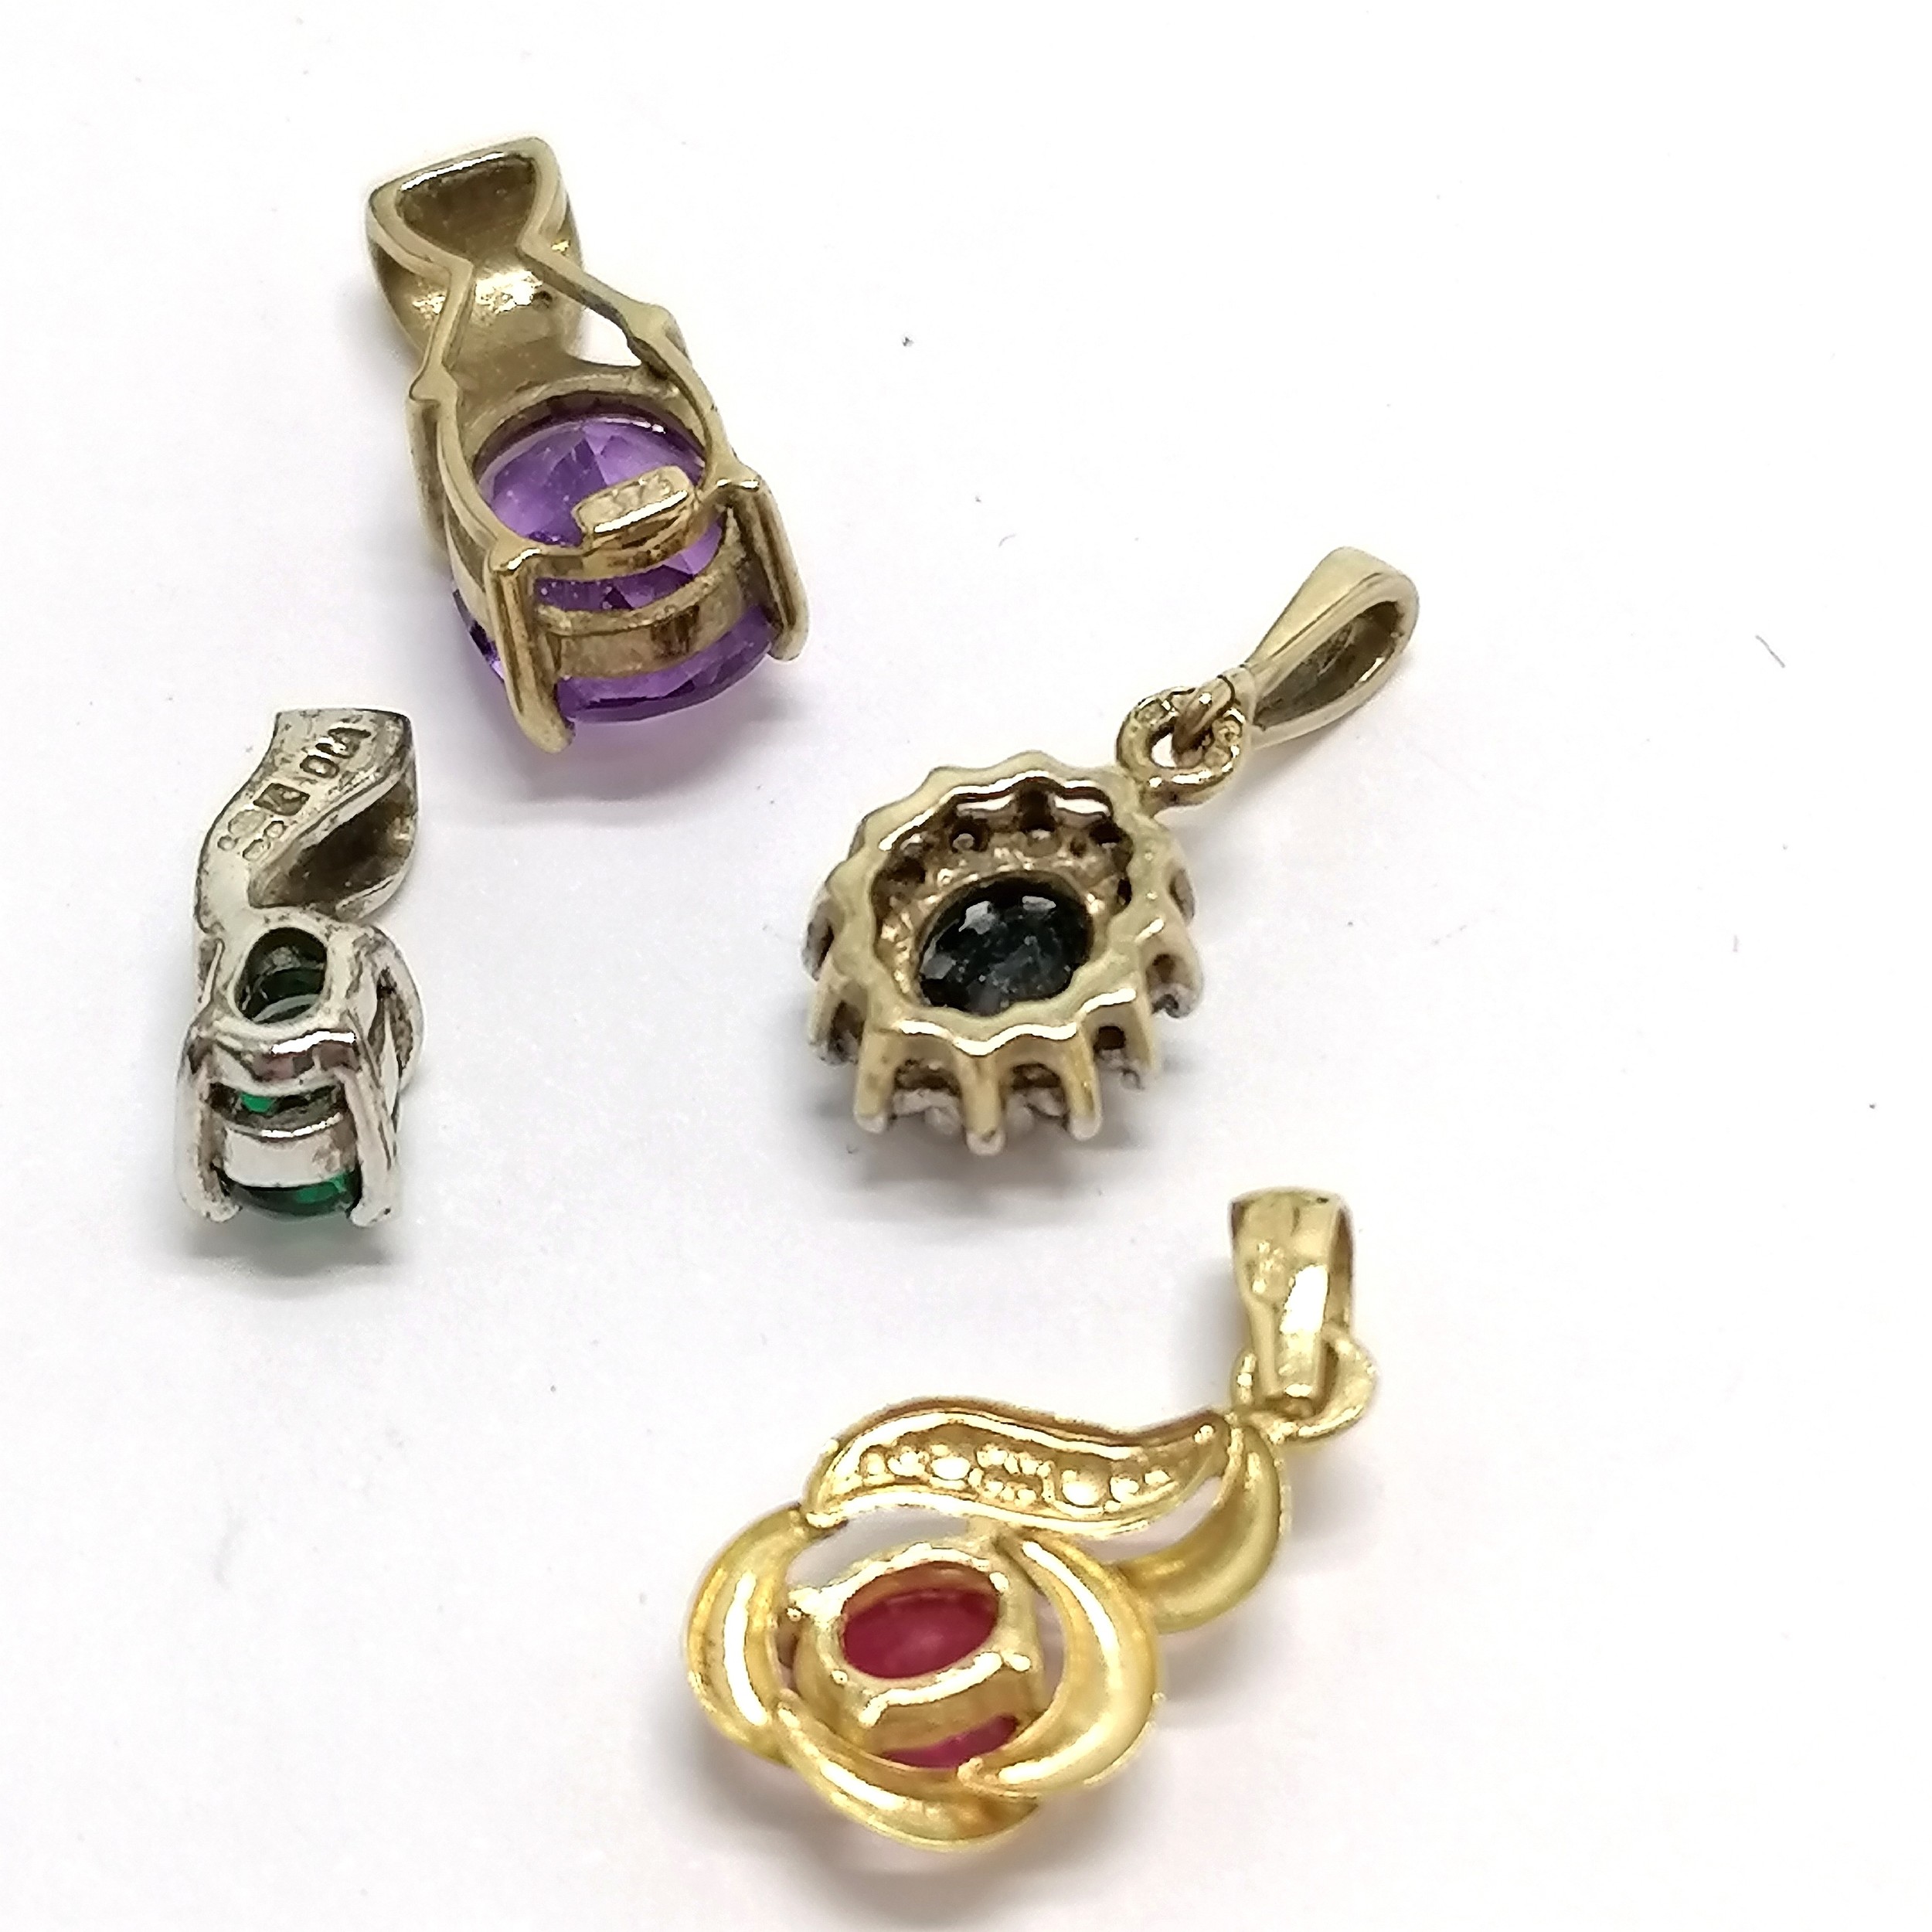 4 x gold stone set pendants - 18ct ruby & rest 9ct inc amethyst, sapphire / diamond cluster etc - - Image 2 of 2